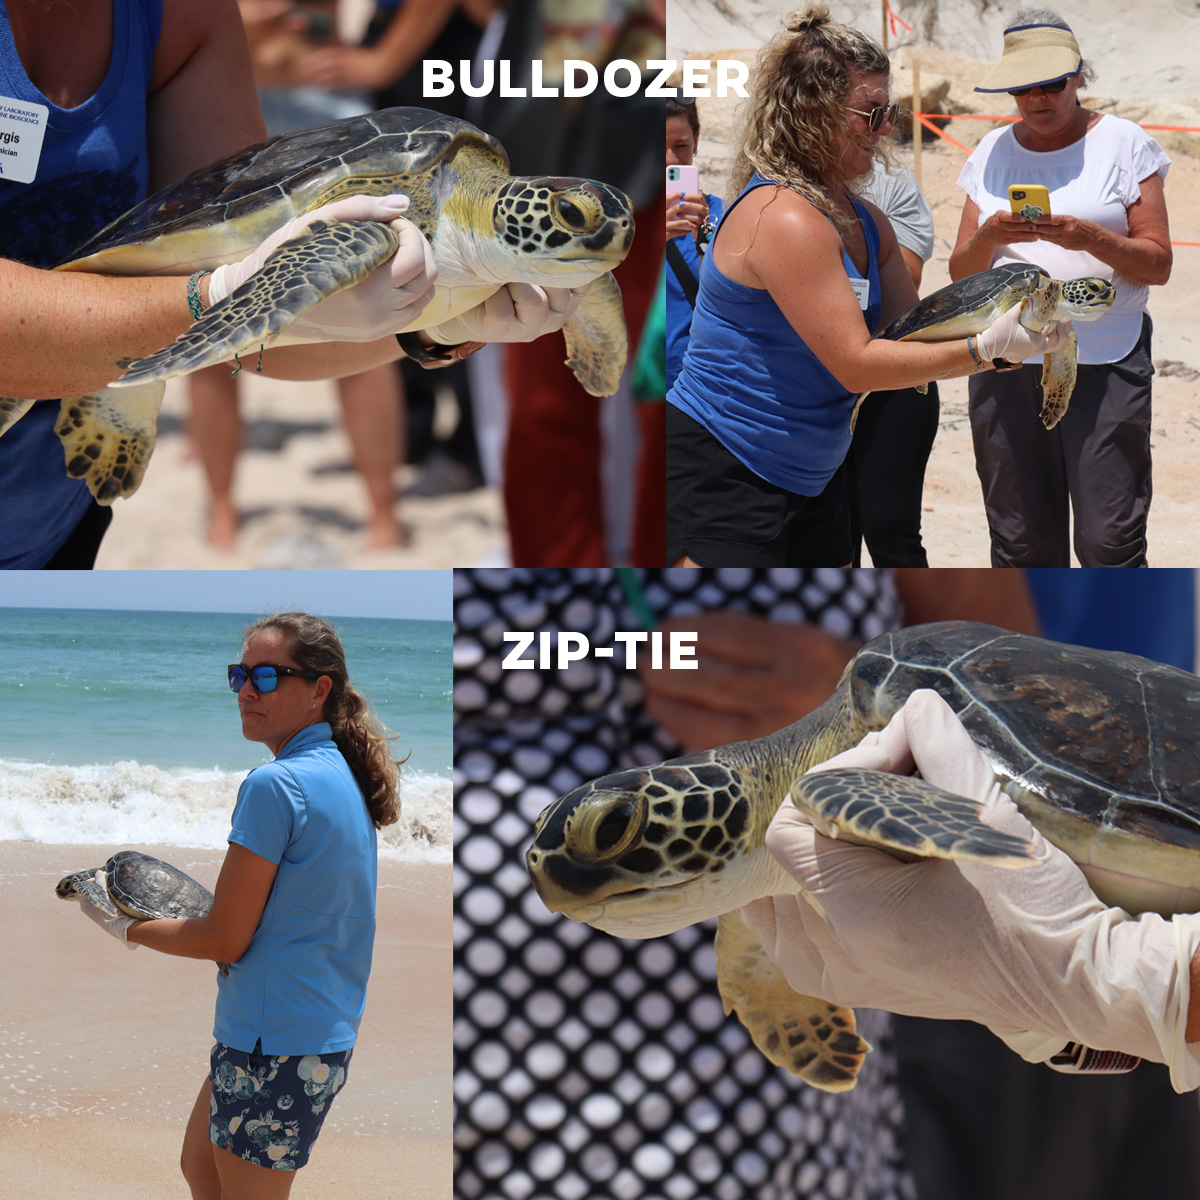 Sea Turtles Zip-Tie and Bulldozer Released